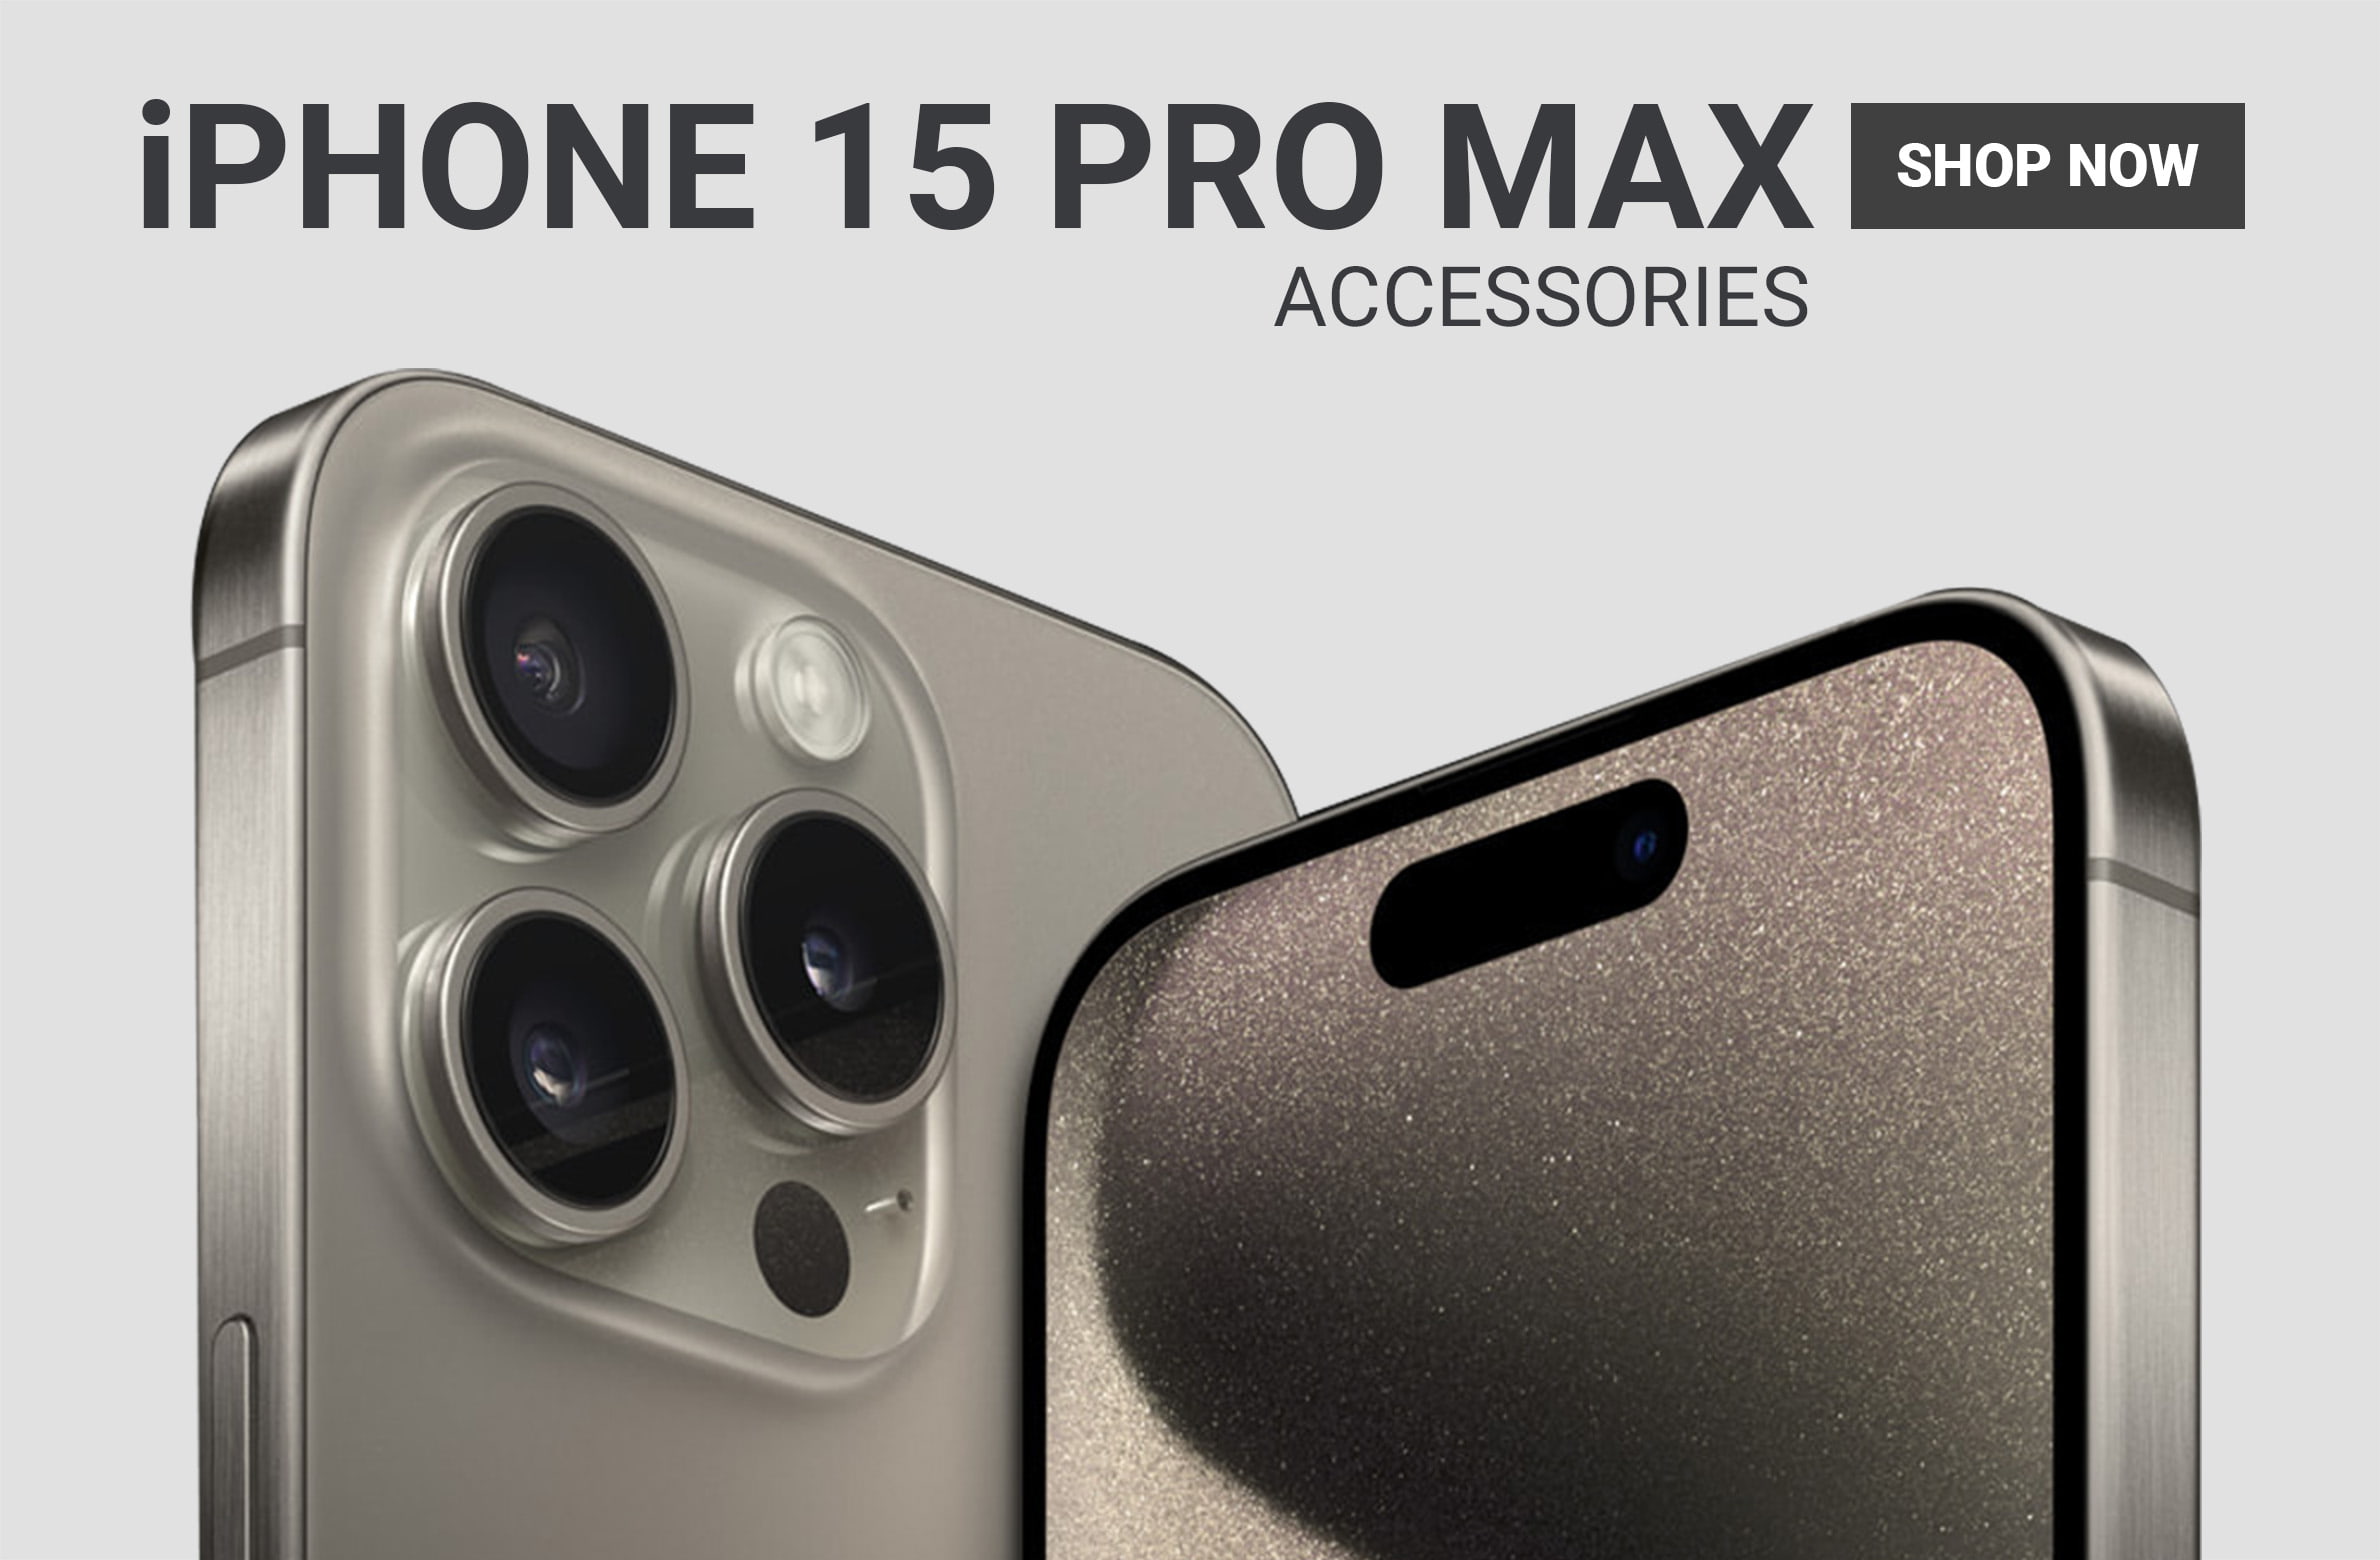 iPhone 15 Pro Max Accessories